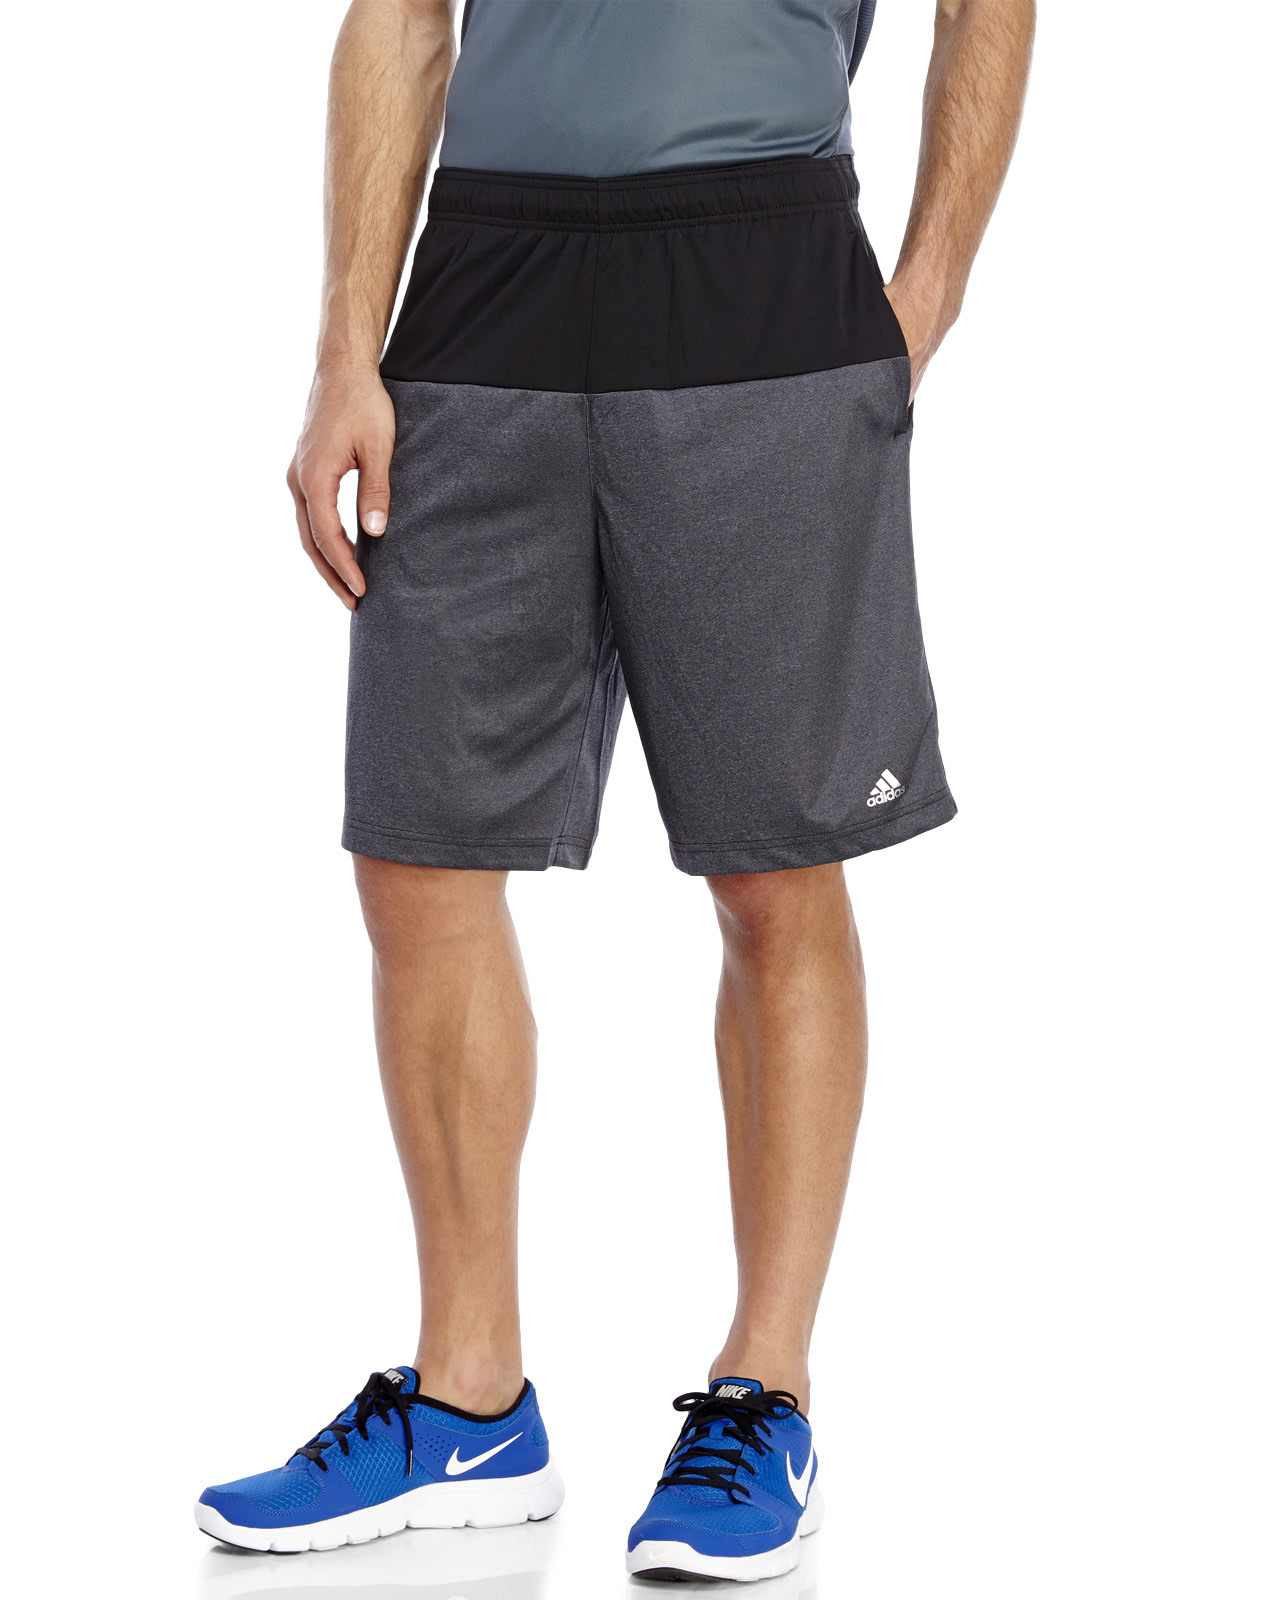 adidas climalite basketball shorts